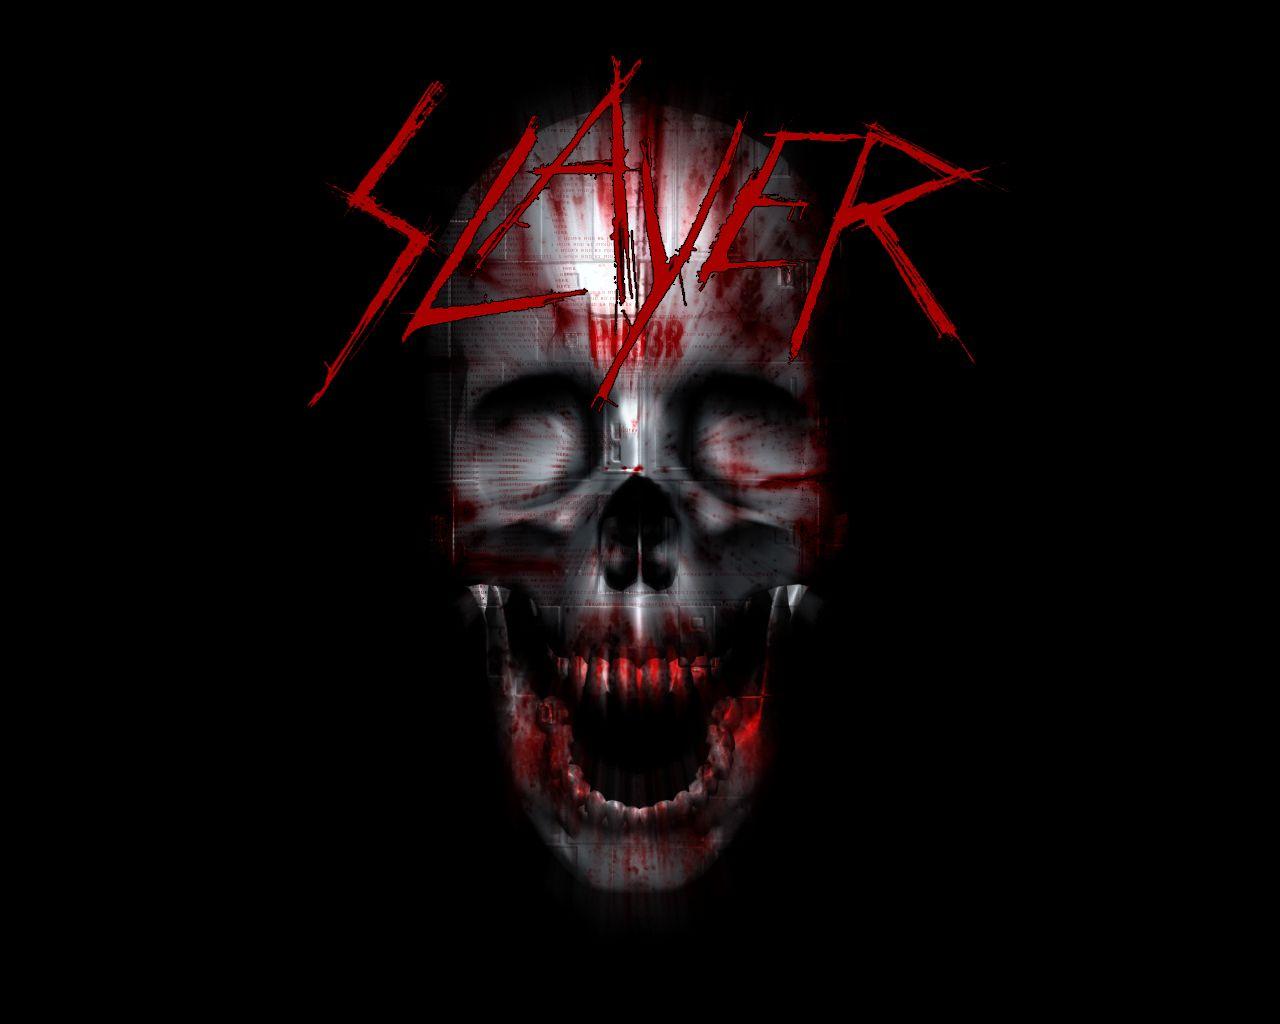 Slayer Wallpaper HD. file name slayer wallpaper posted admin